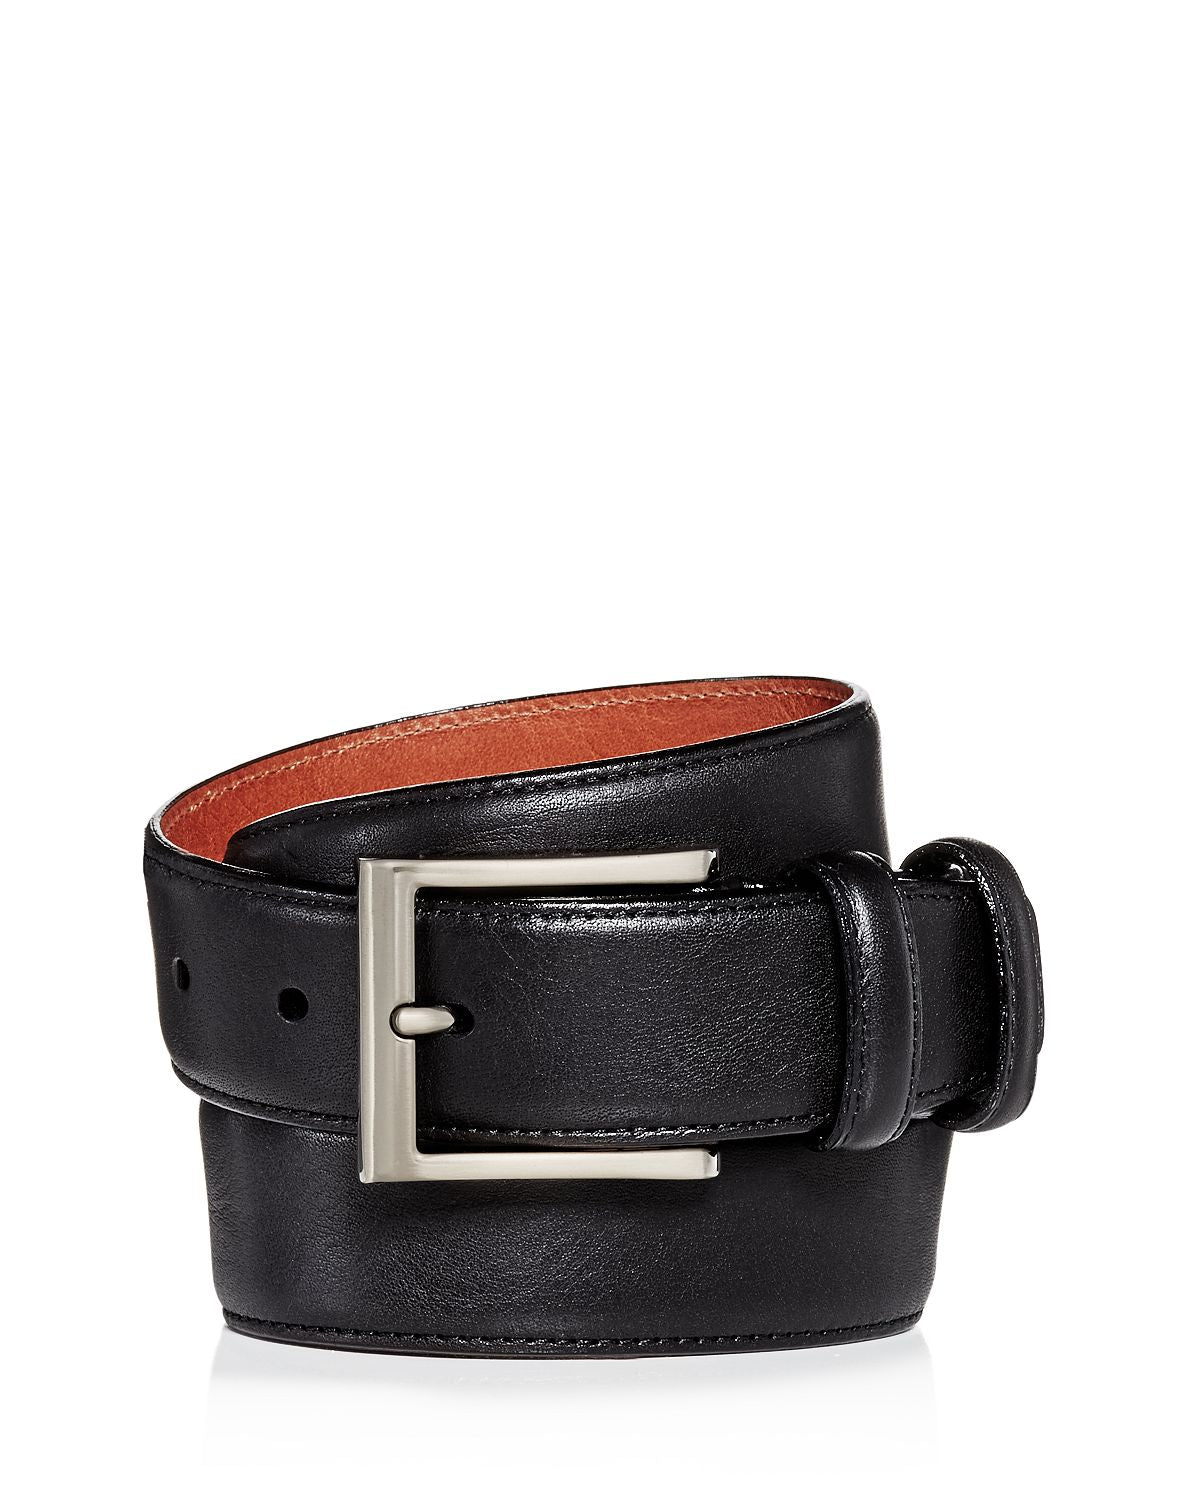 Trafalgar Corvino Double-keeper Leather Belt Black